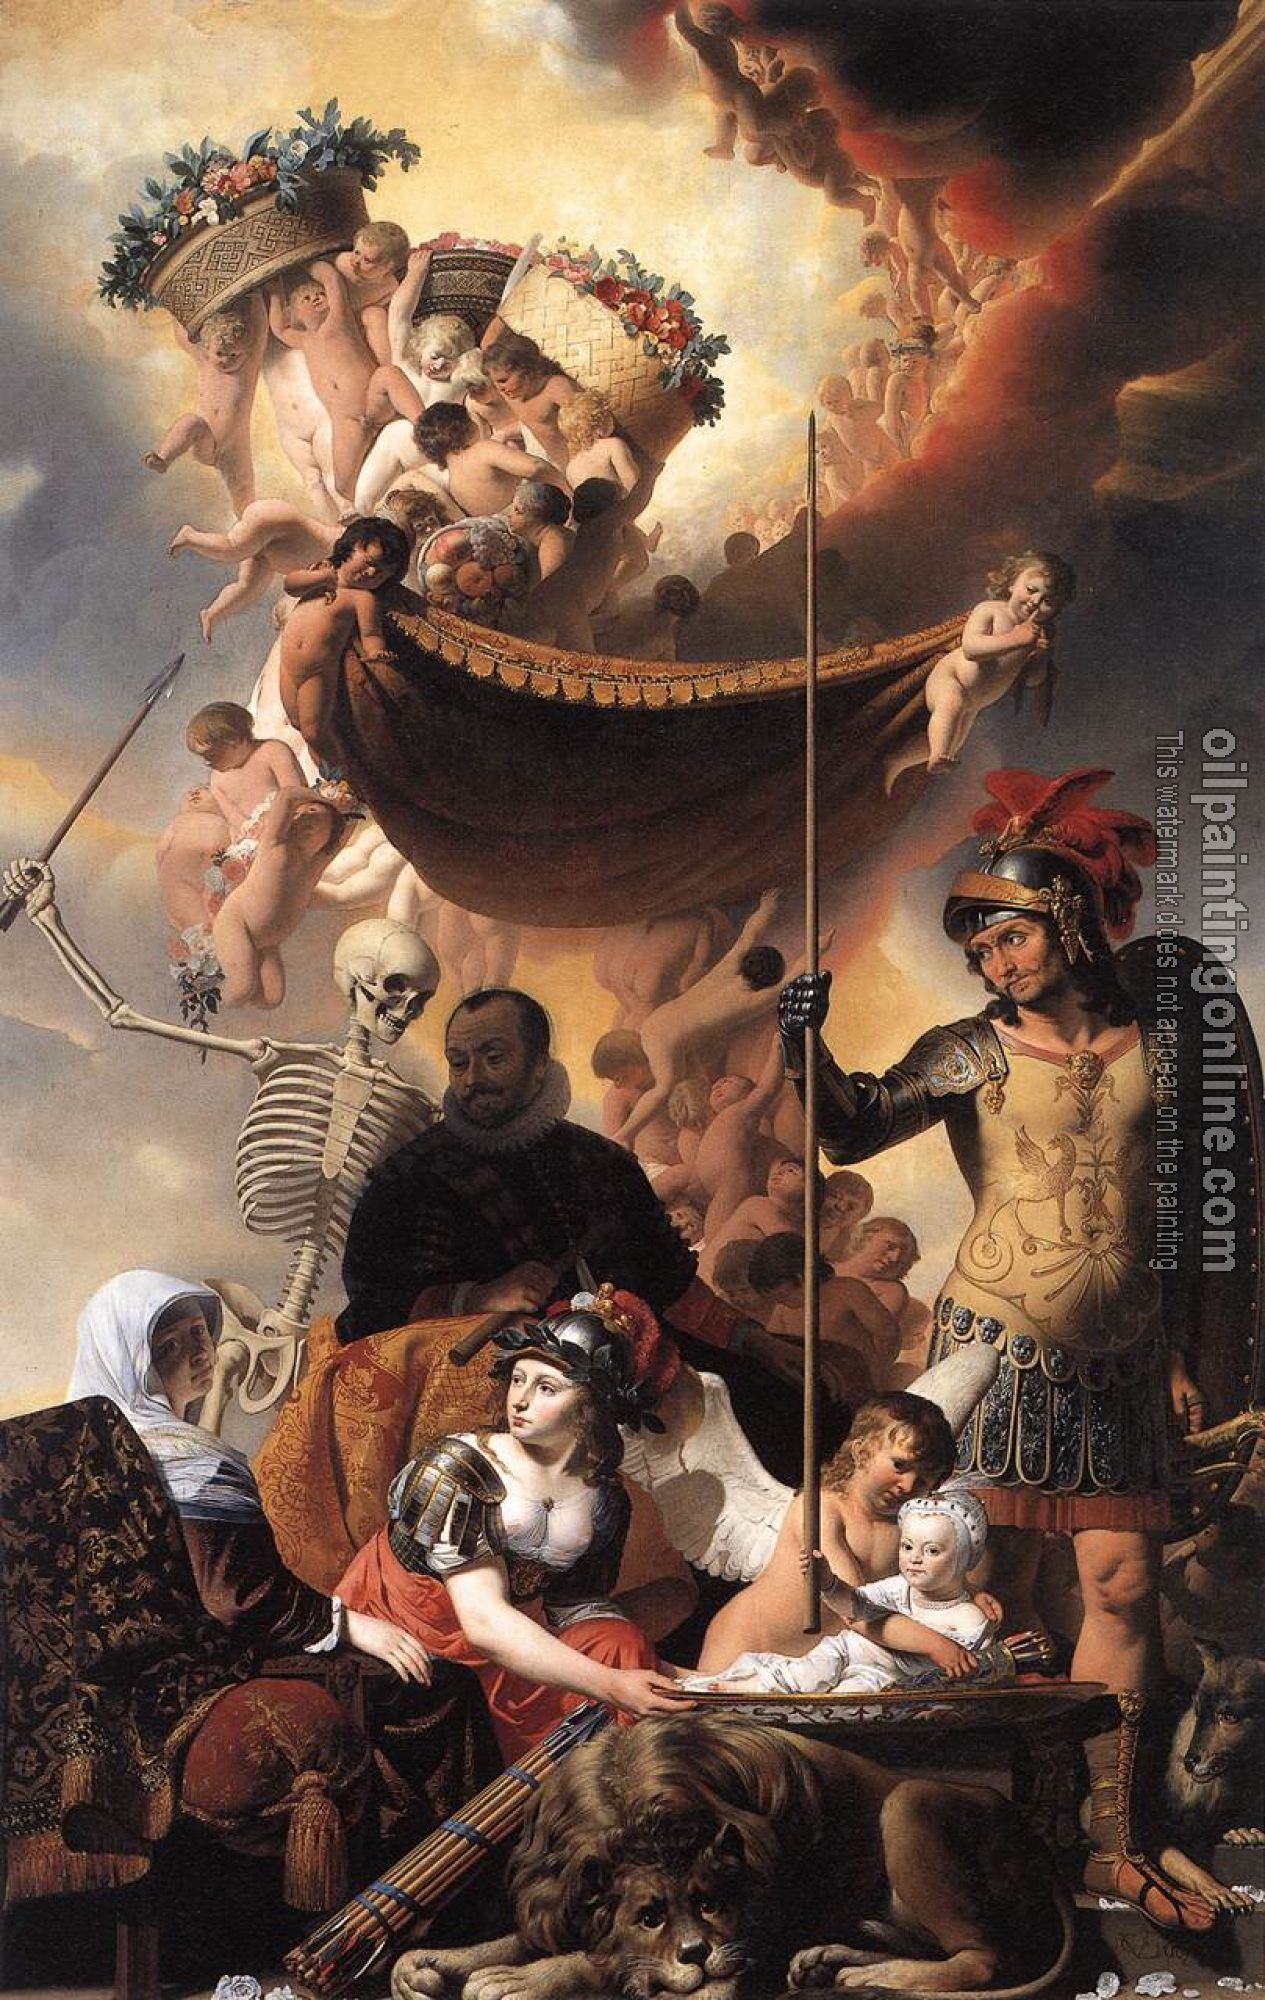 Everdingen, Caesar van - Allegory of the Birth of Frederik Hendrik